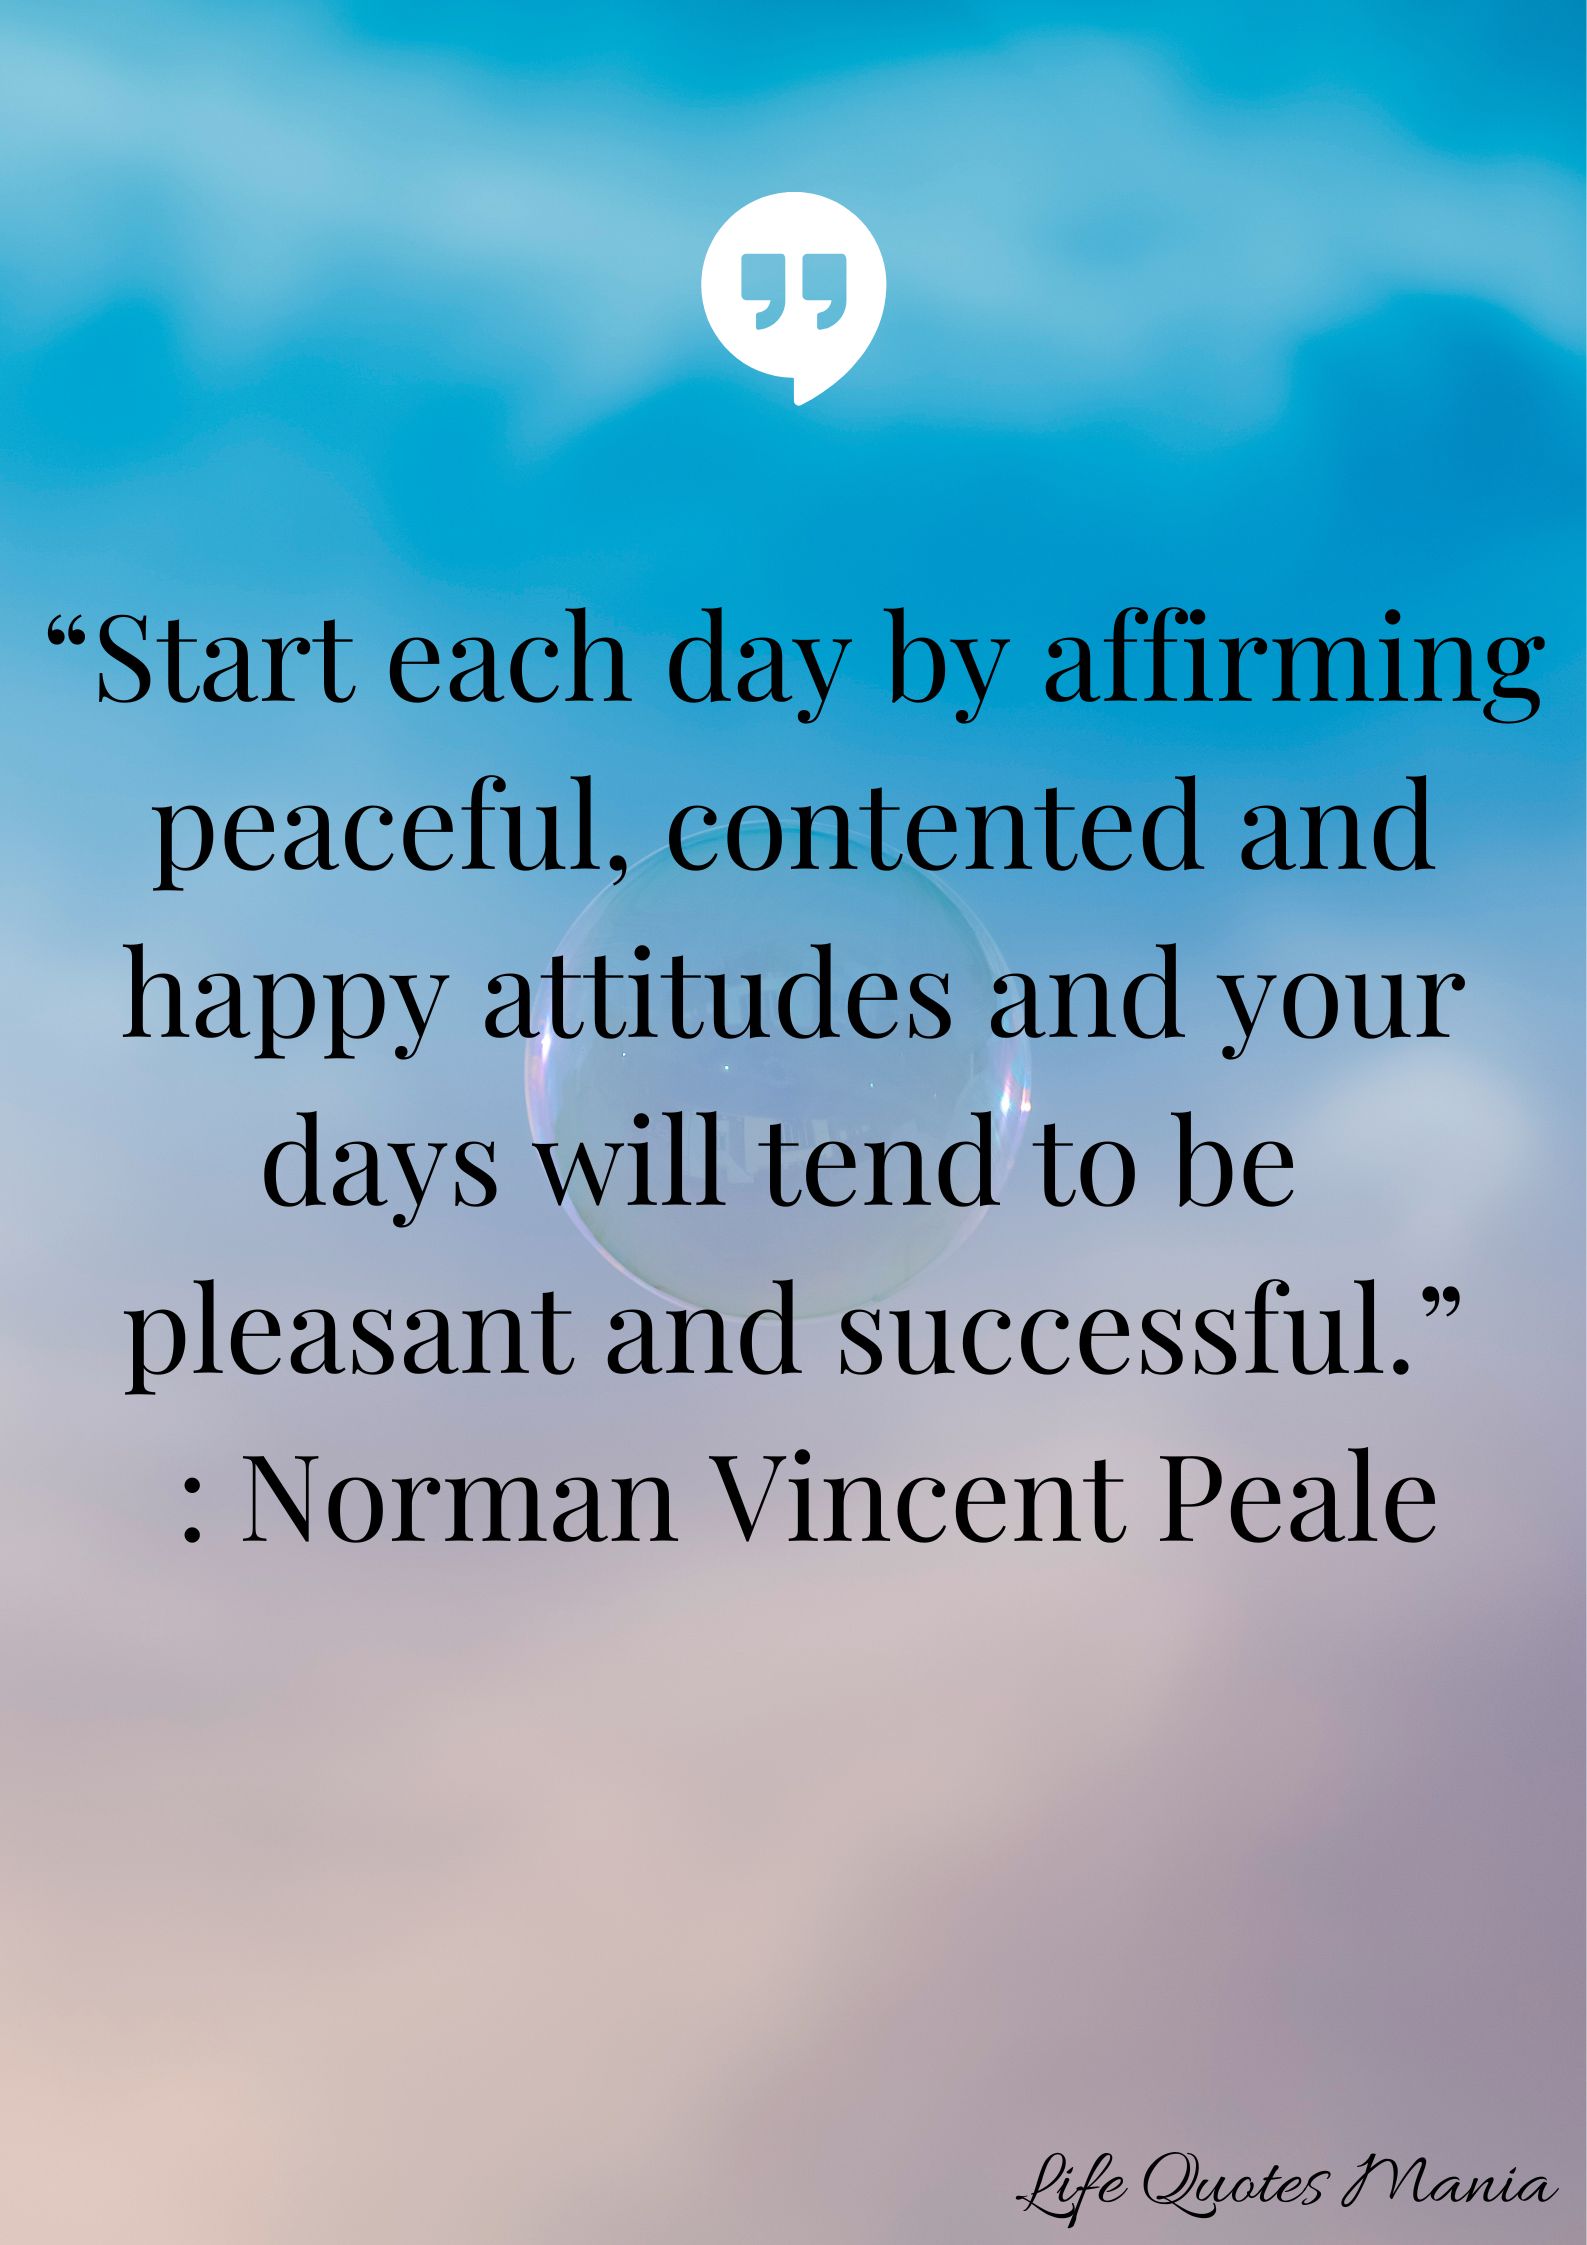 Attitude Quote - Norman Vincent Peale